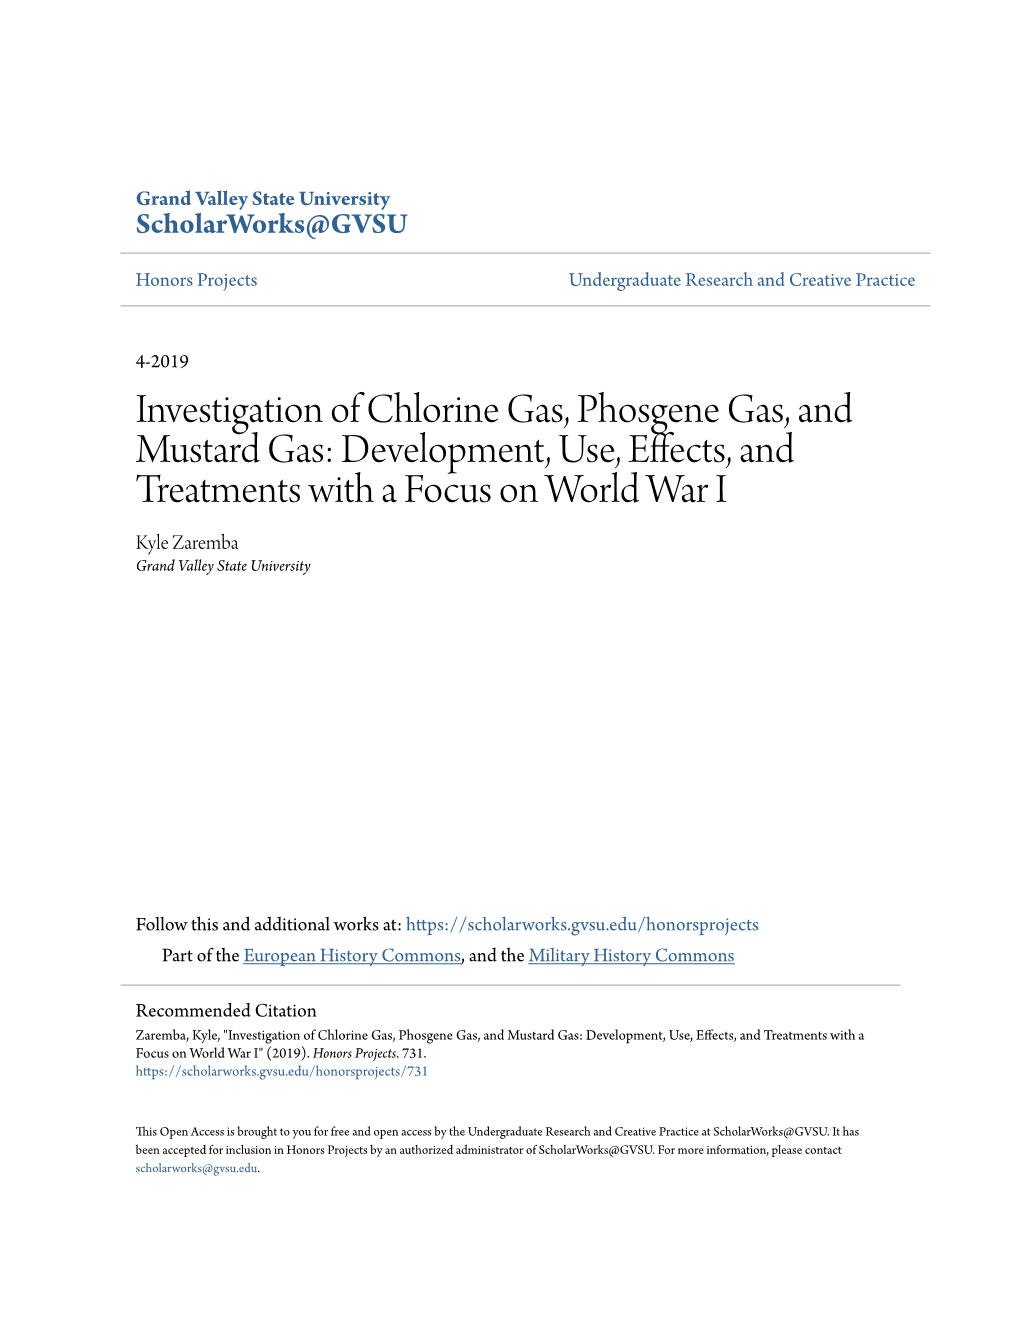 Investigation of Chlorine Gas, Phosgene Gas, and Mustard